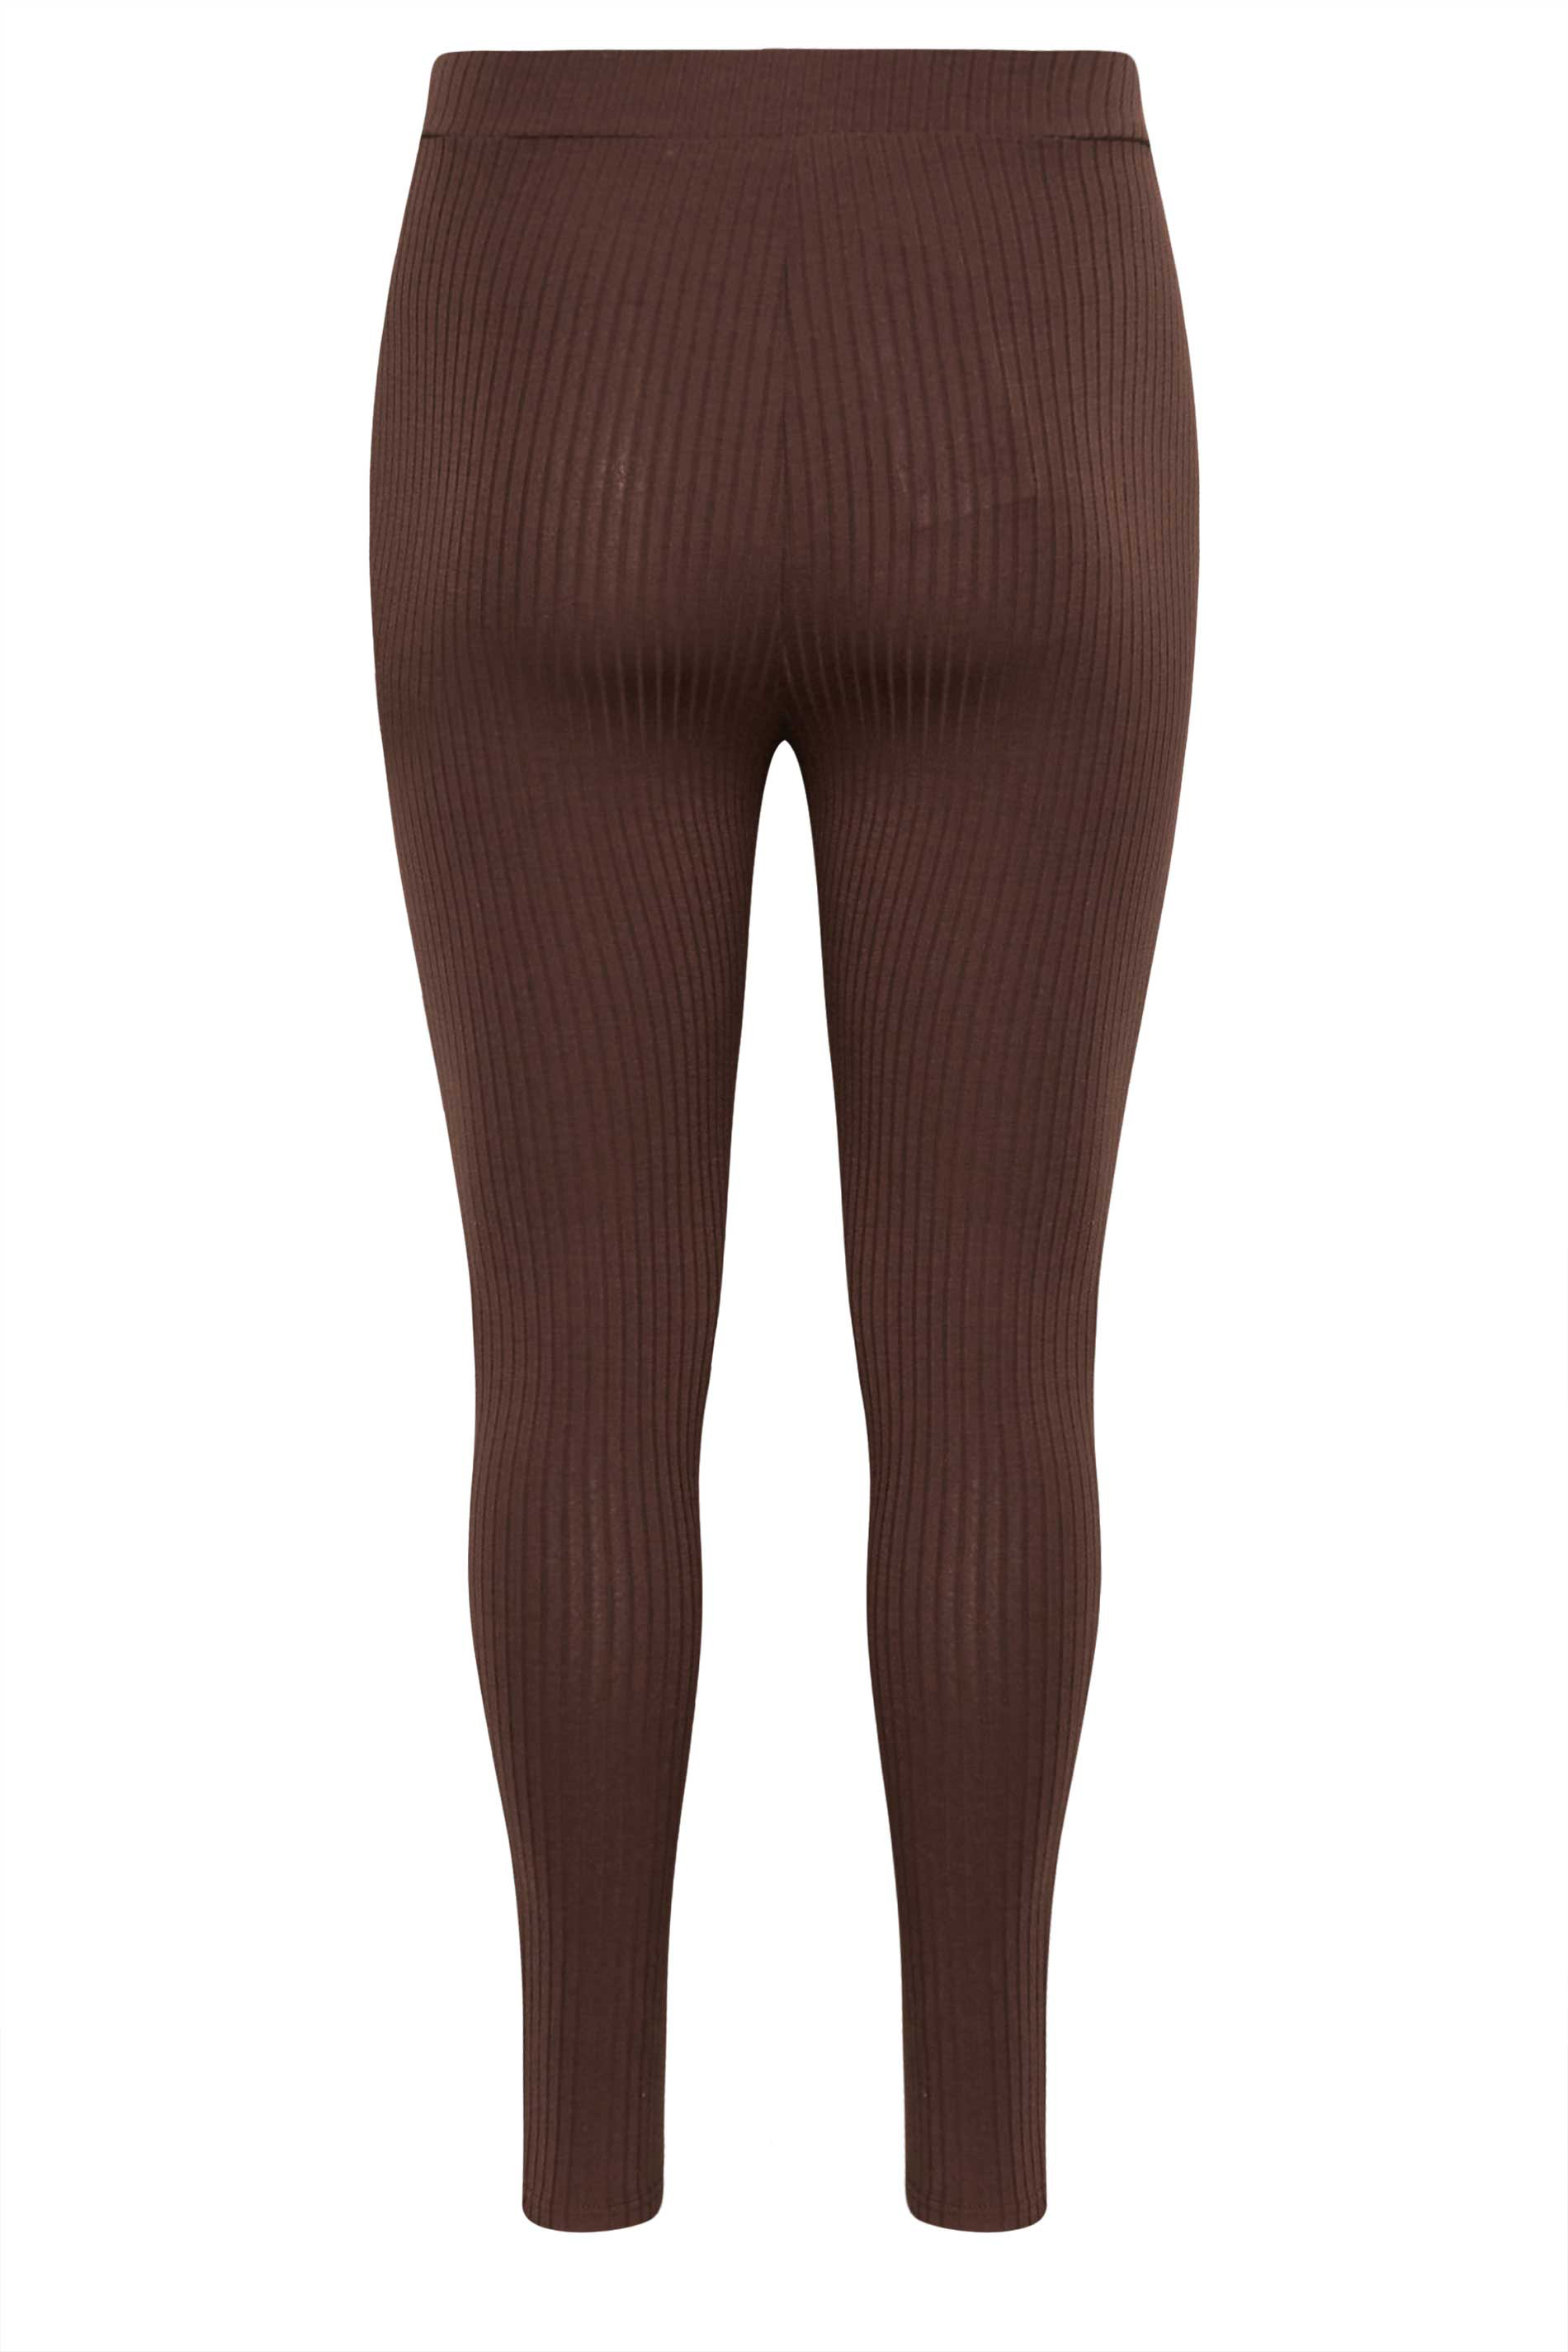 Chocolate Structured Contour Rib Leggings  Ribbed leggings, Basic  leggings, Comfy fashion